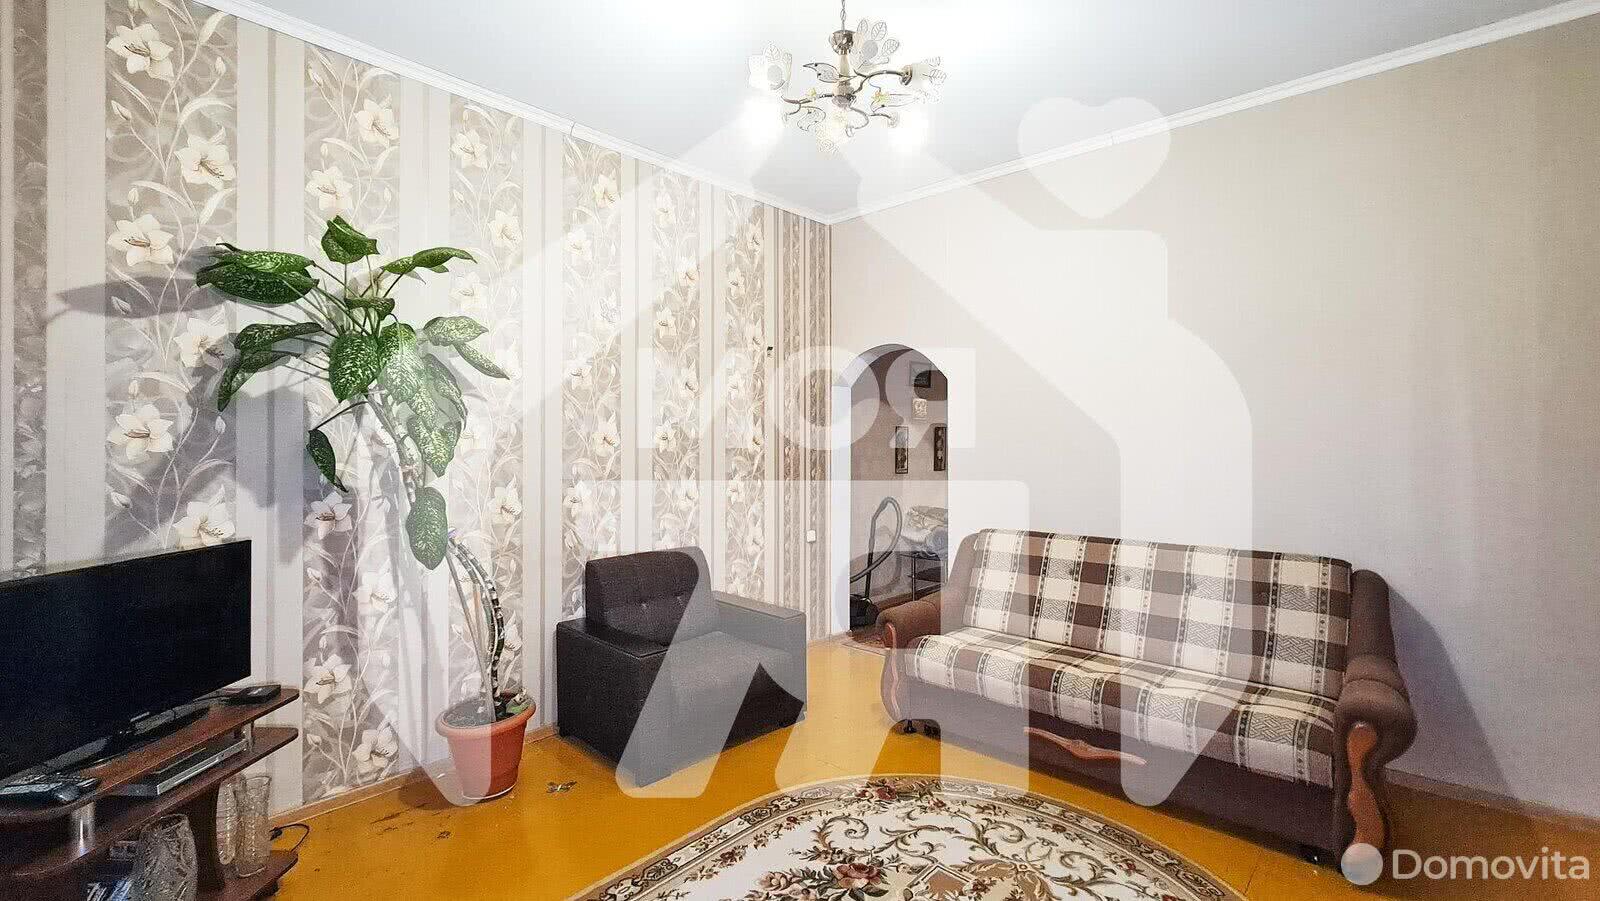 Цена продажи квартиры, Борисов, пр-т Революции, д. 66